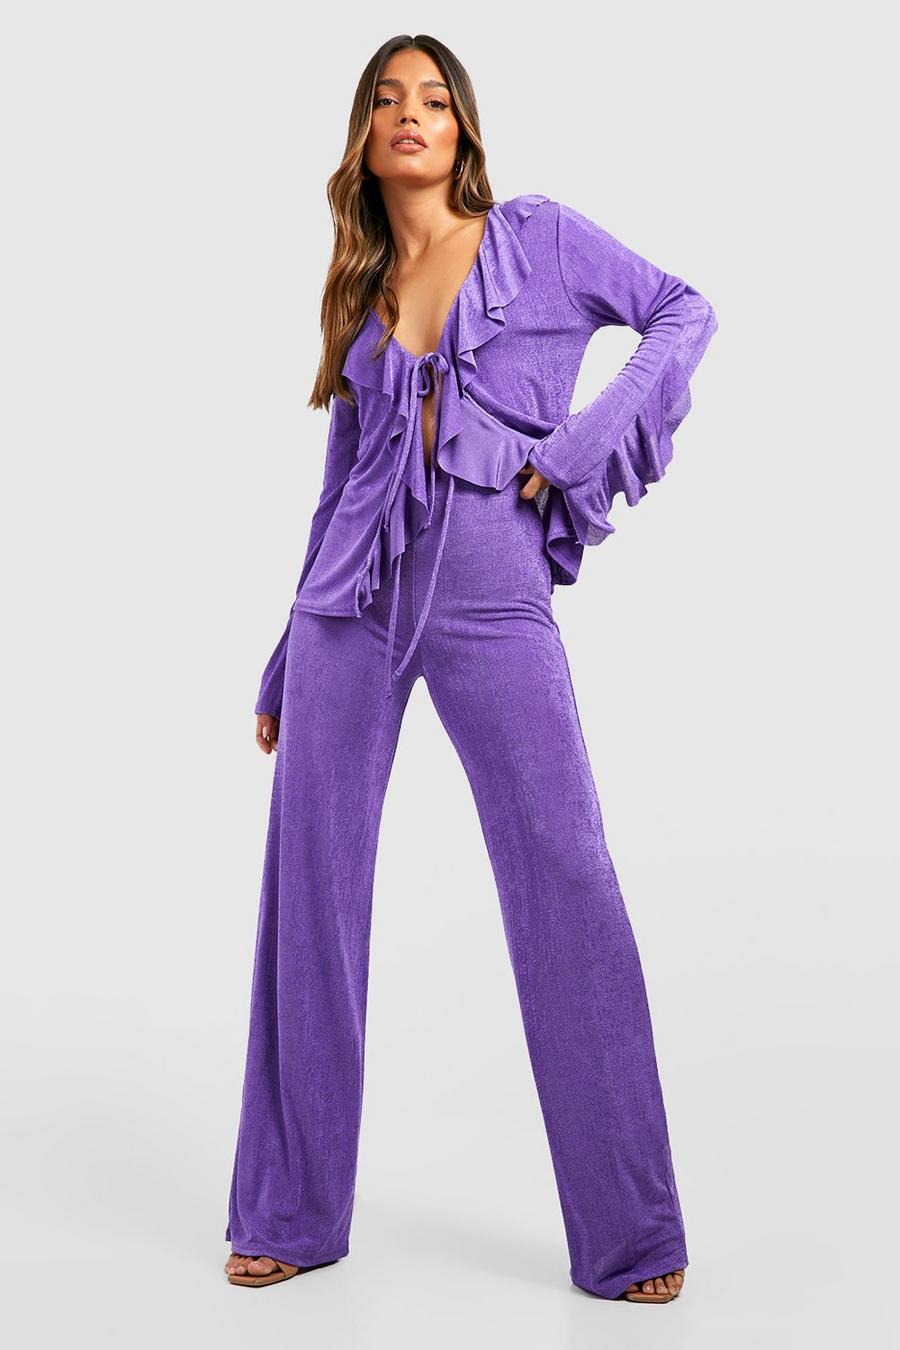 Jewel purple Textured Slinky Wide Leg Pants